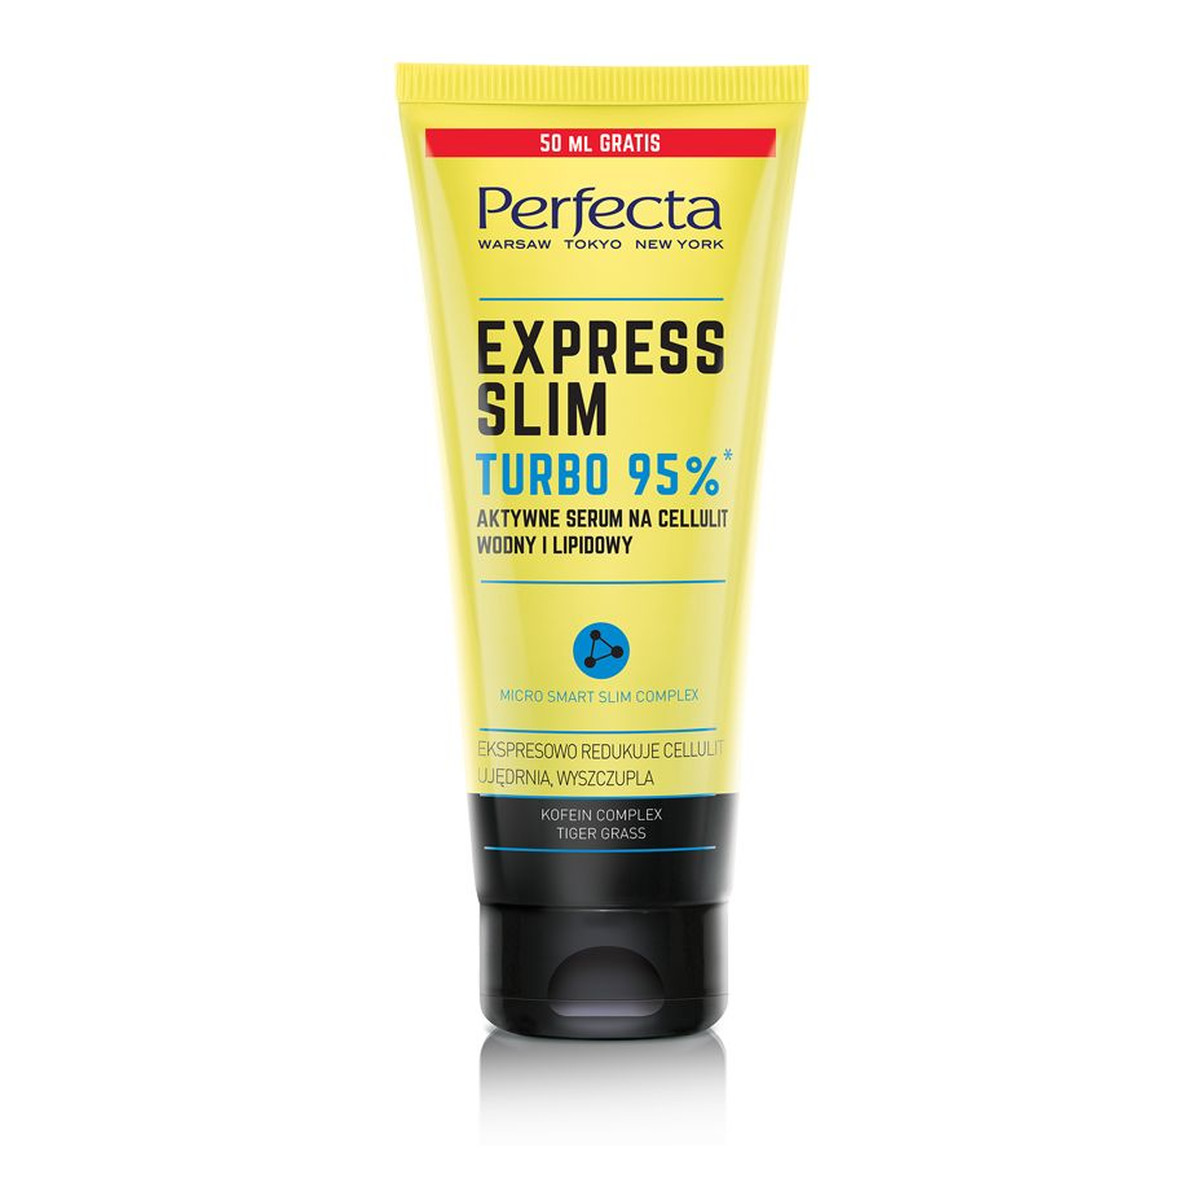 Perfecta Express Slim Turbo aktywne serum na cellulit wodny i lipidowy 250ml